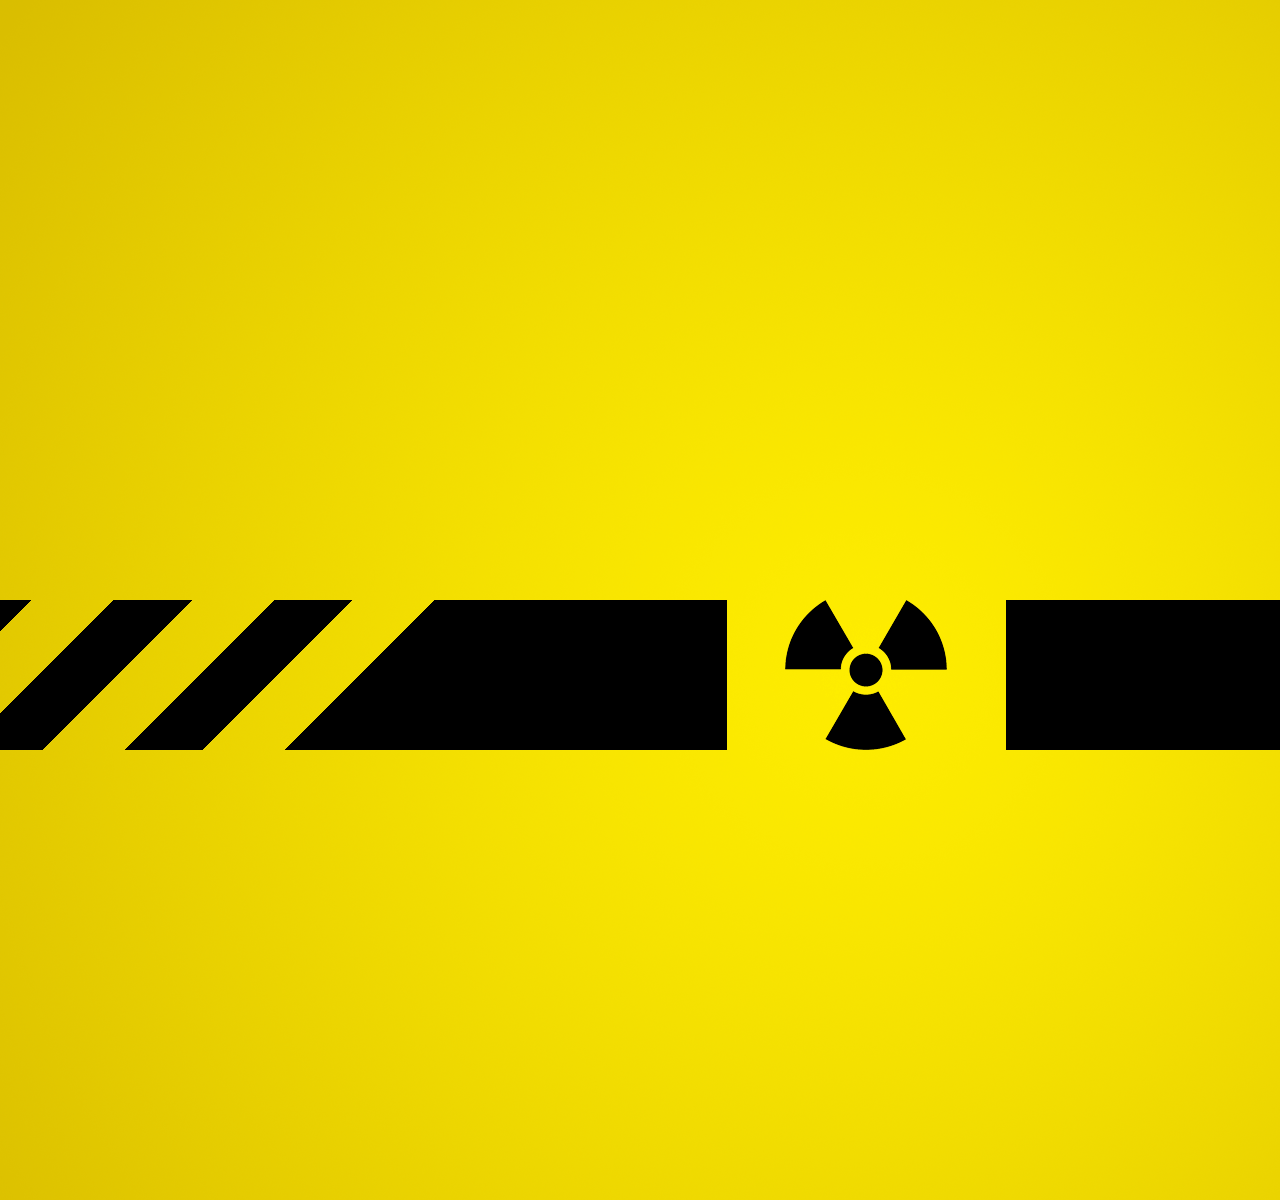 Cool Radioactive Logo - Cool Black And Yellow Radioactive Logo Wallpaper | PaperPull